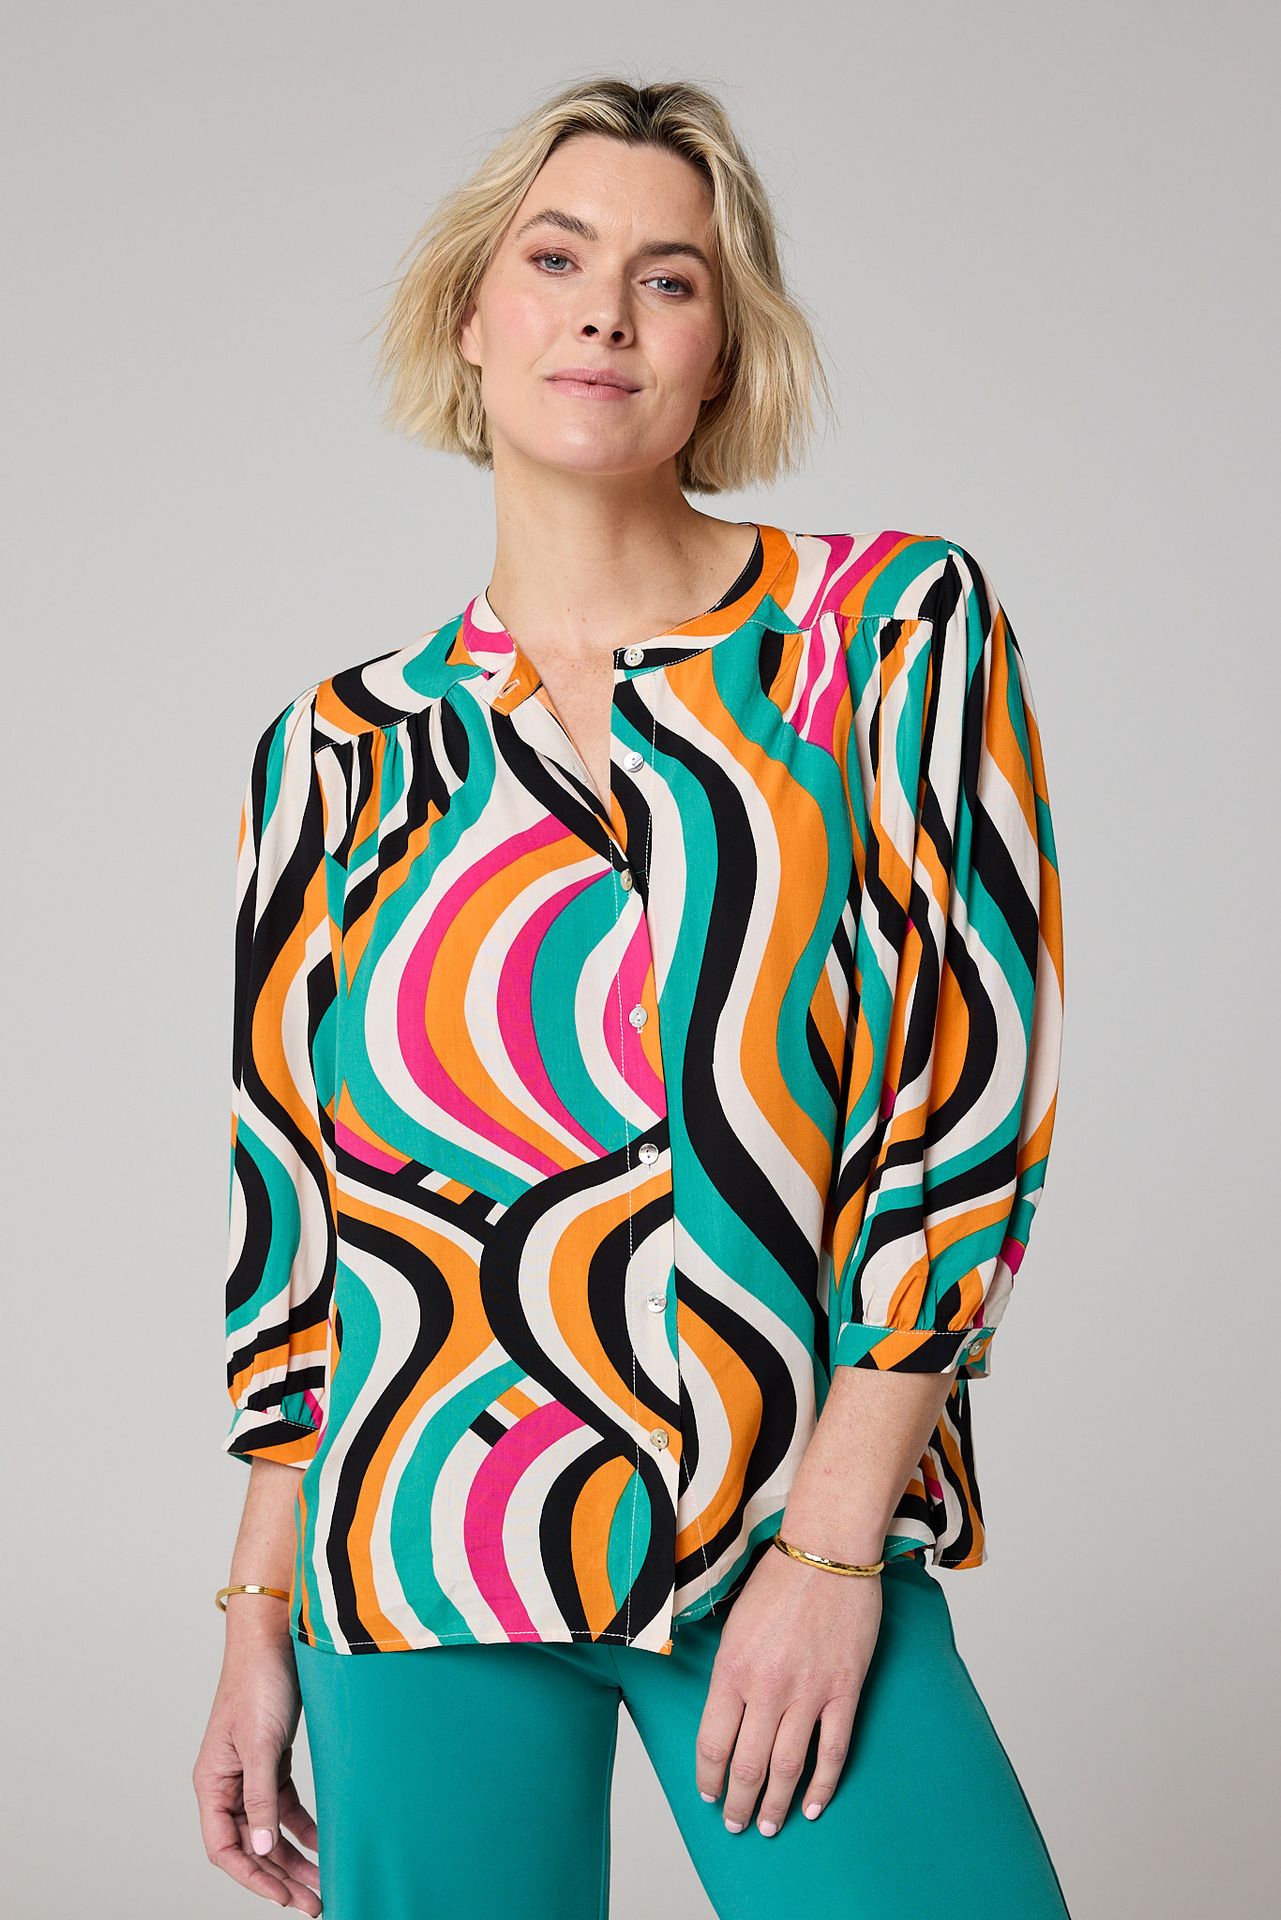 Norah Meerkleurige blouse multicolor 213927-002